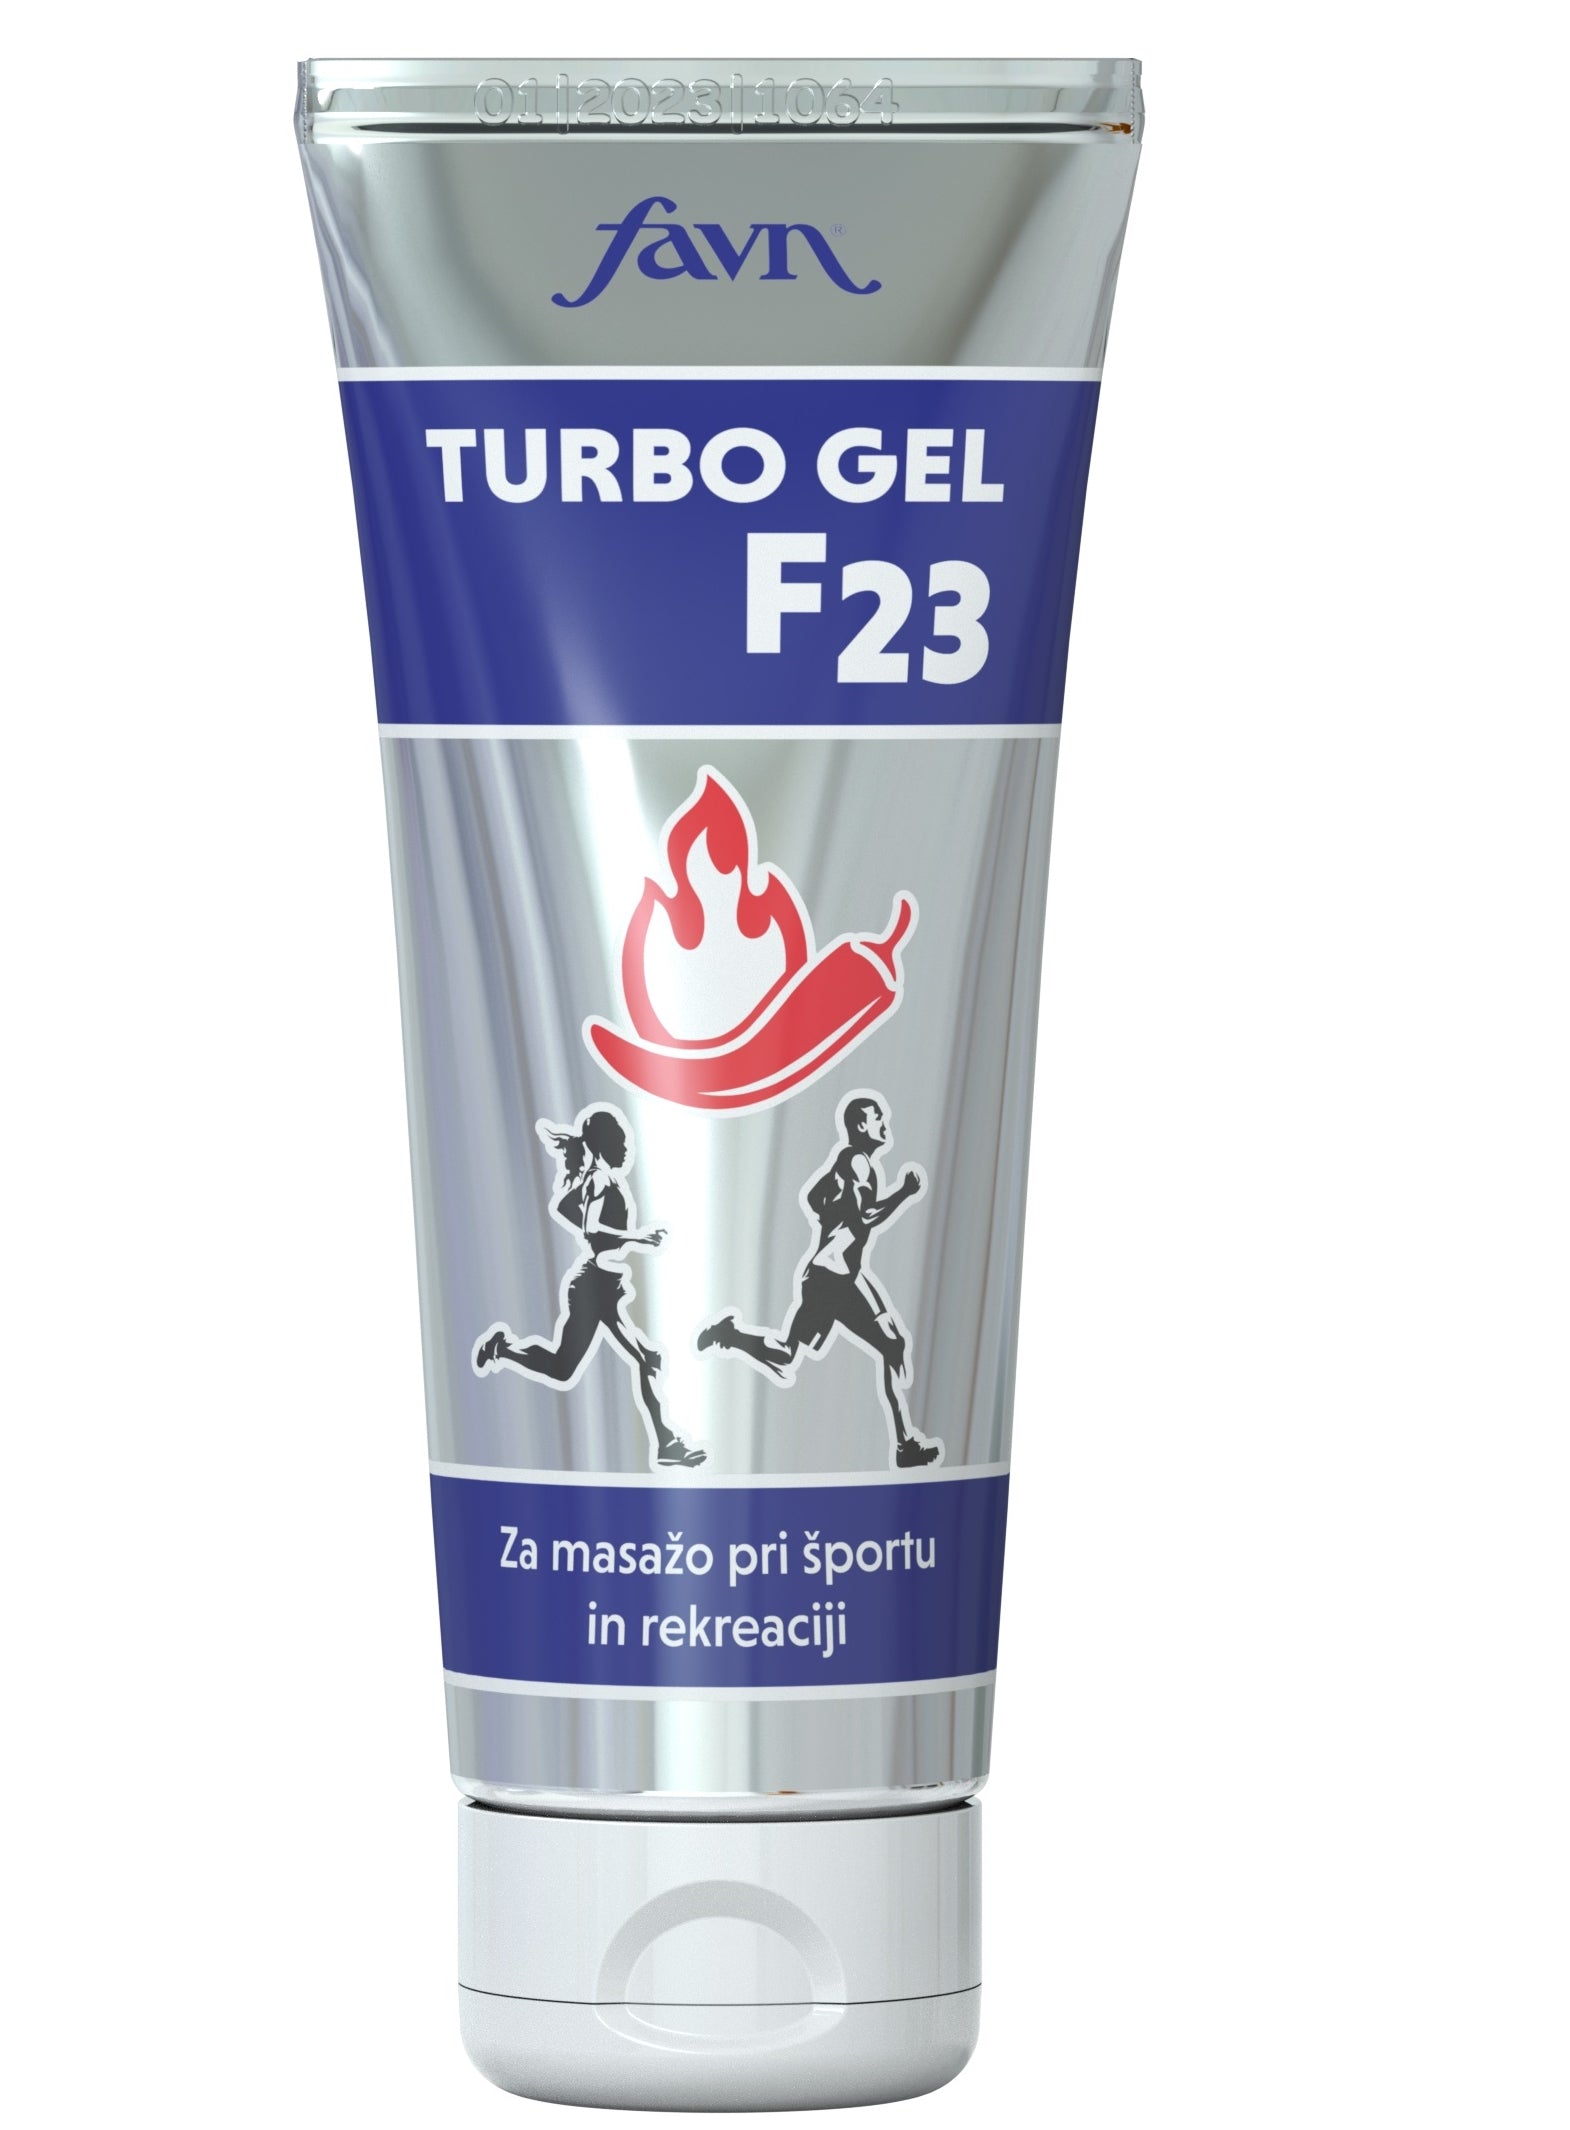 Turbo gel F23